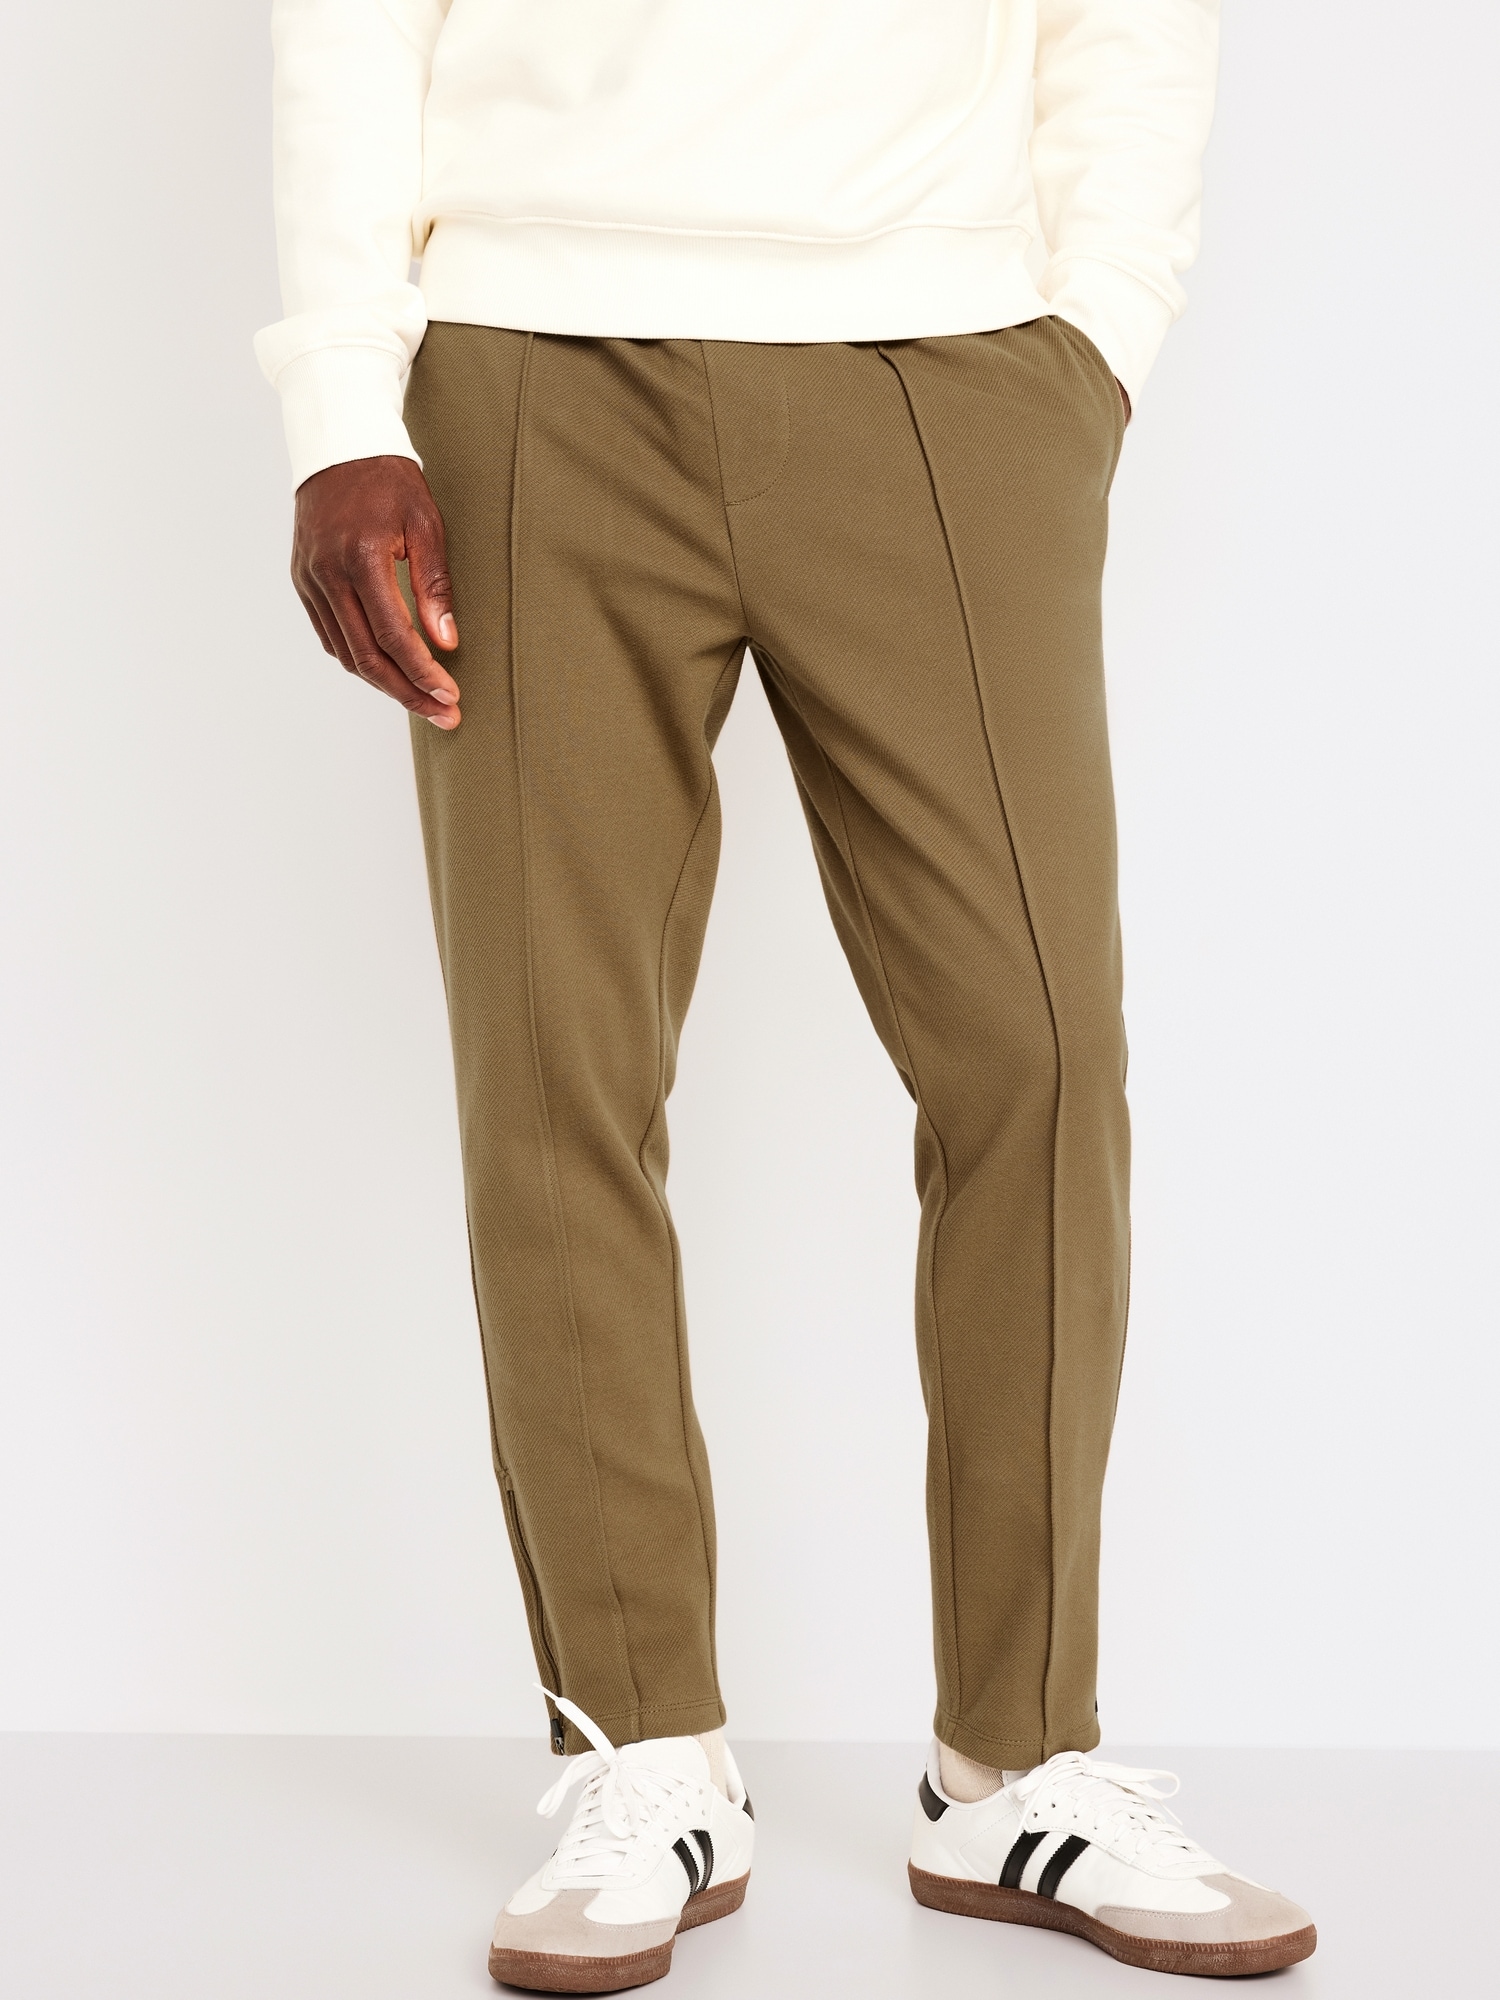 Lifted Anchors Men Jenner Track Pants - BAIT Exclusive khaki multi